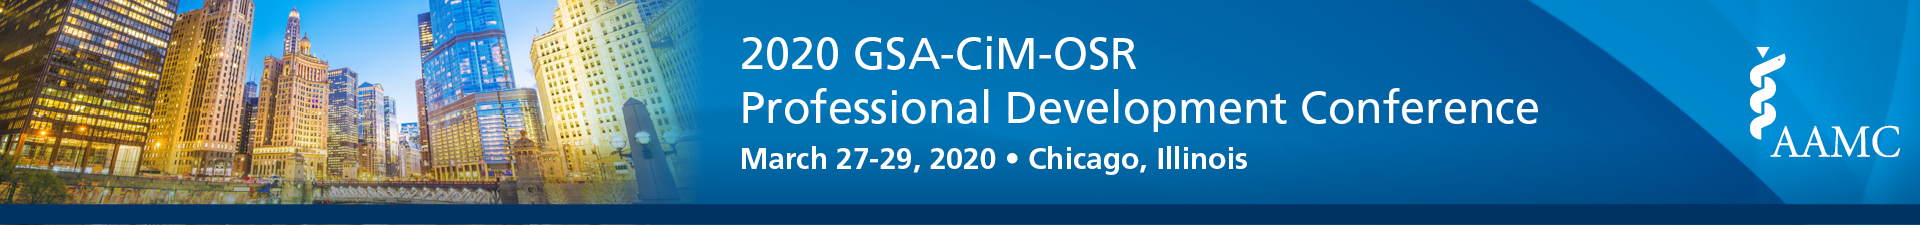 2020 GSA-CiM-OSR Professional Development Conference Event Banner